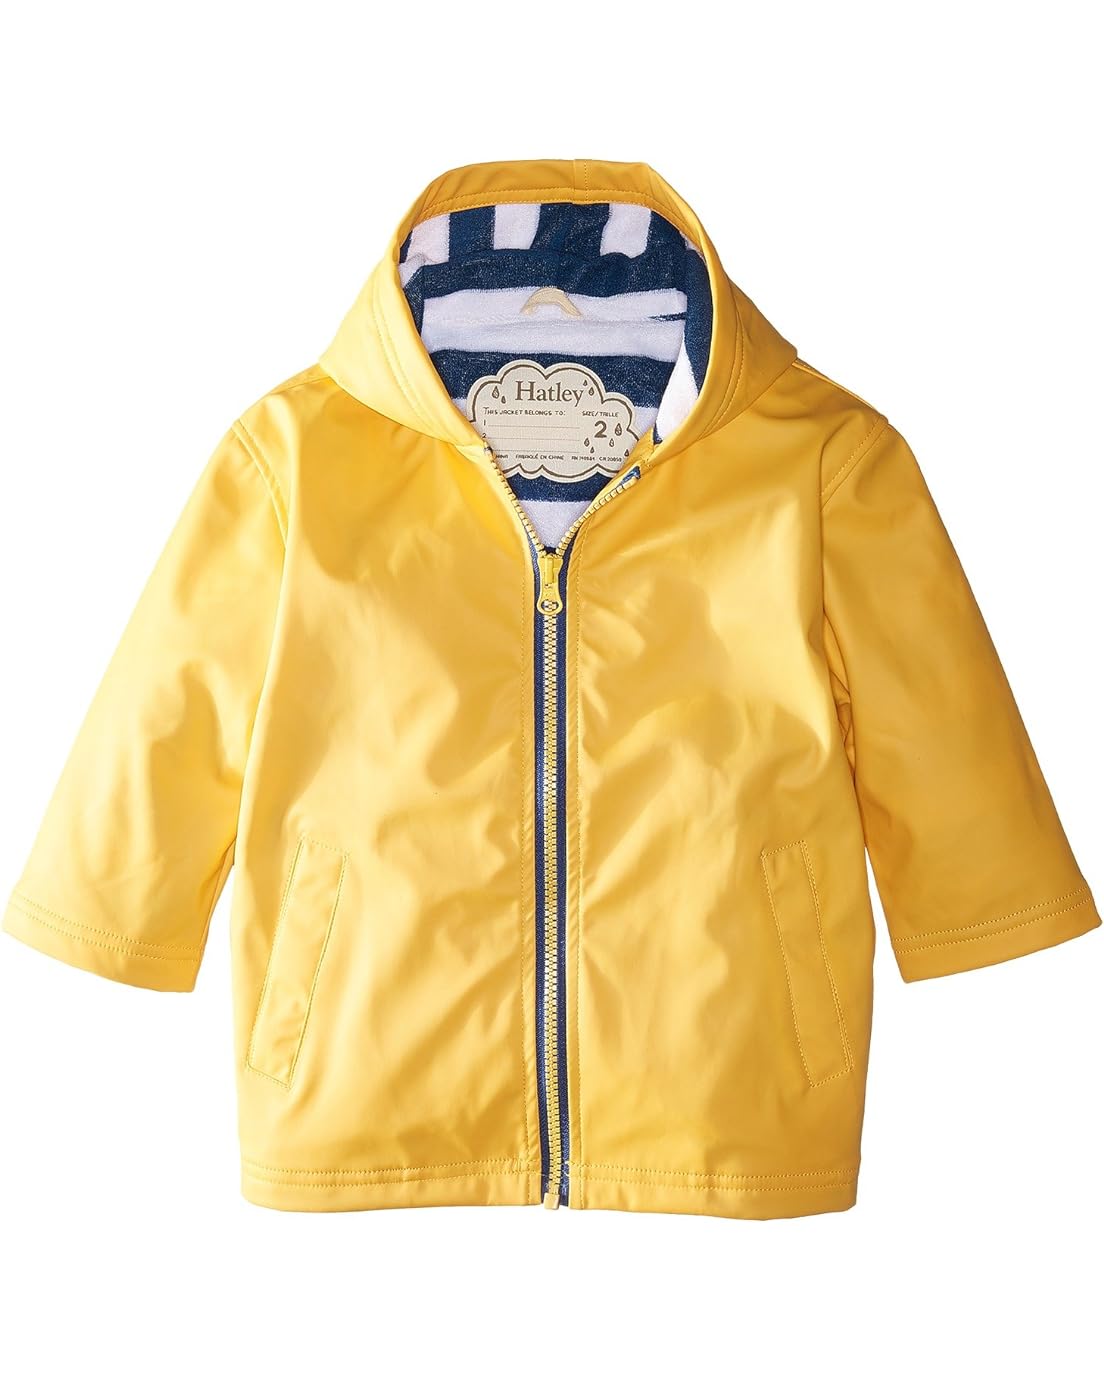 Hatley Kids Yellow with Navy Stripe Lining Splash Jacket (Toddler/Little Kids/Big Kids)